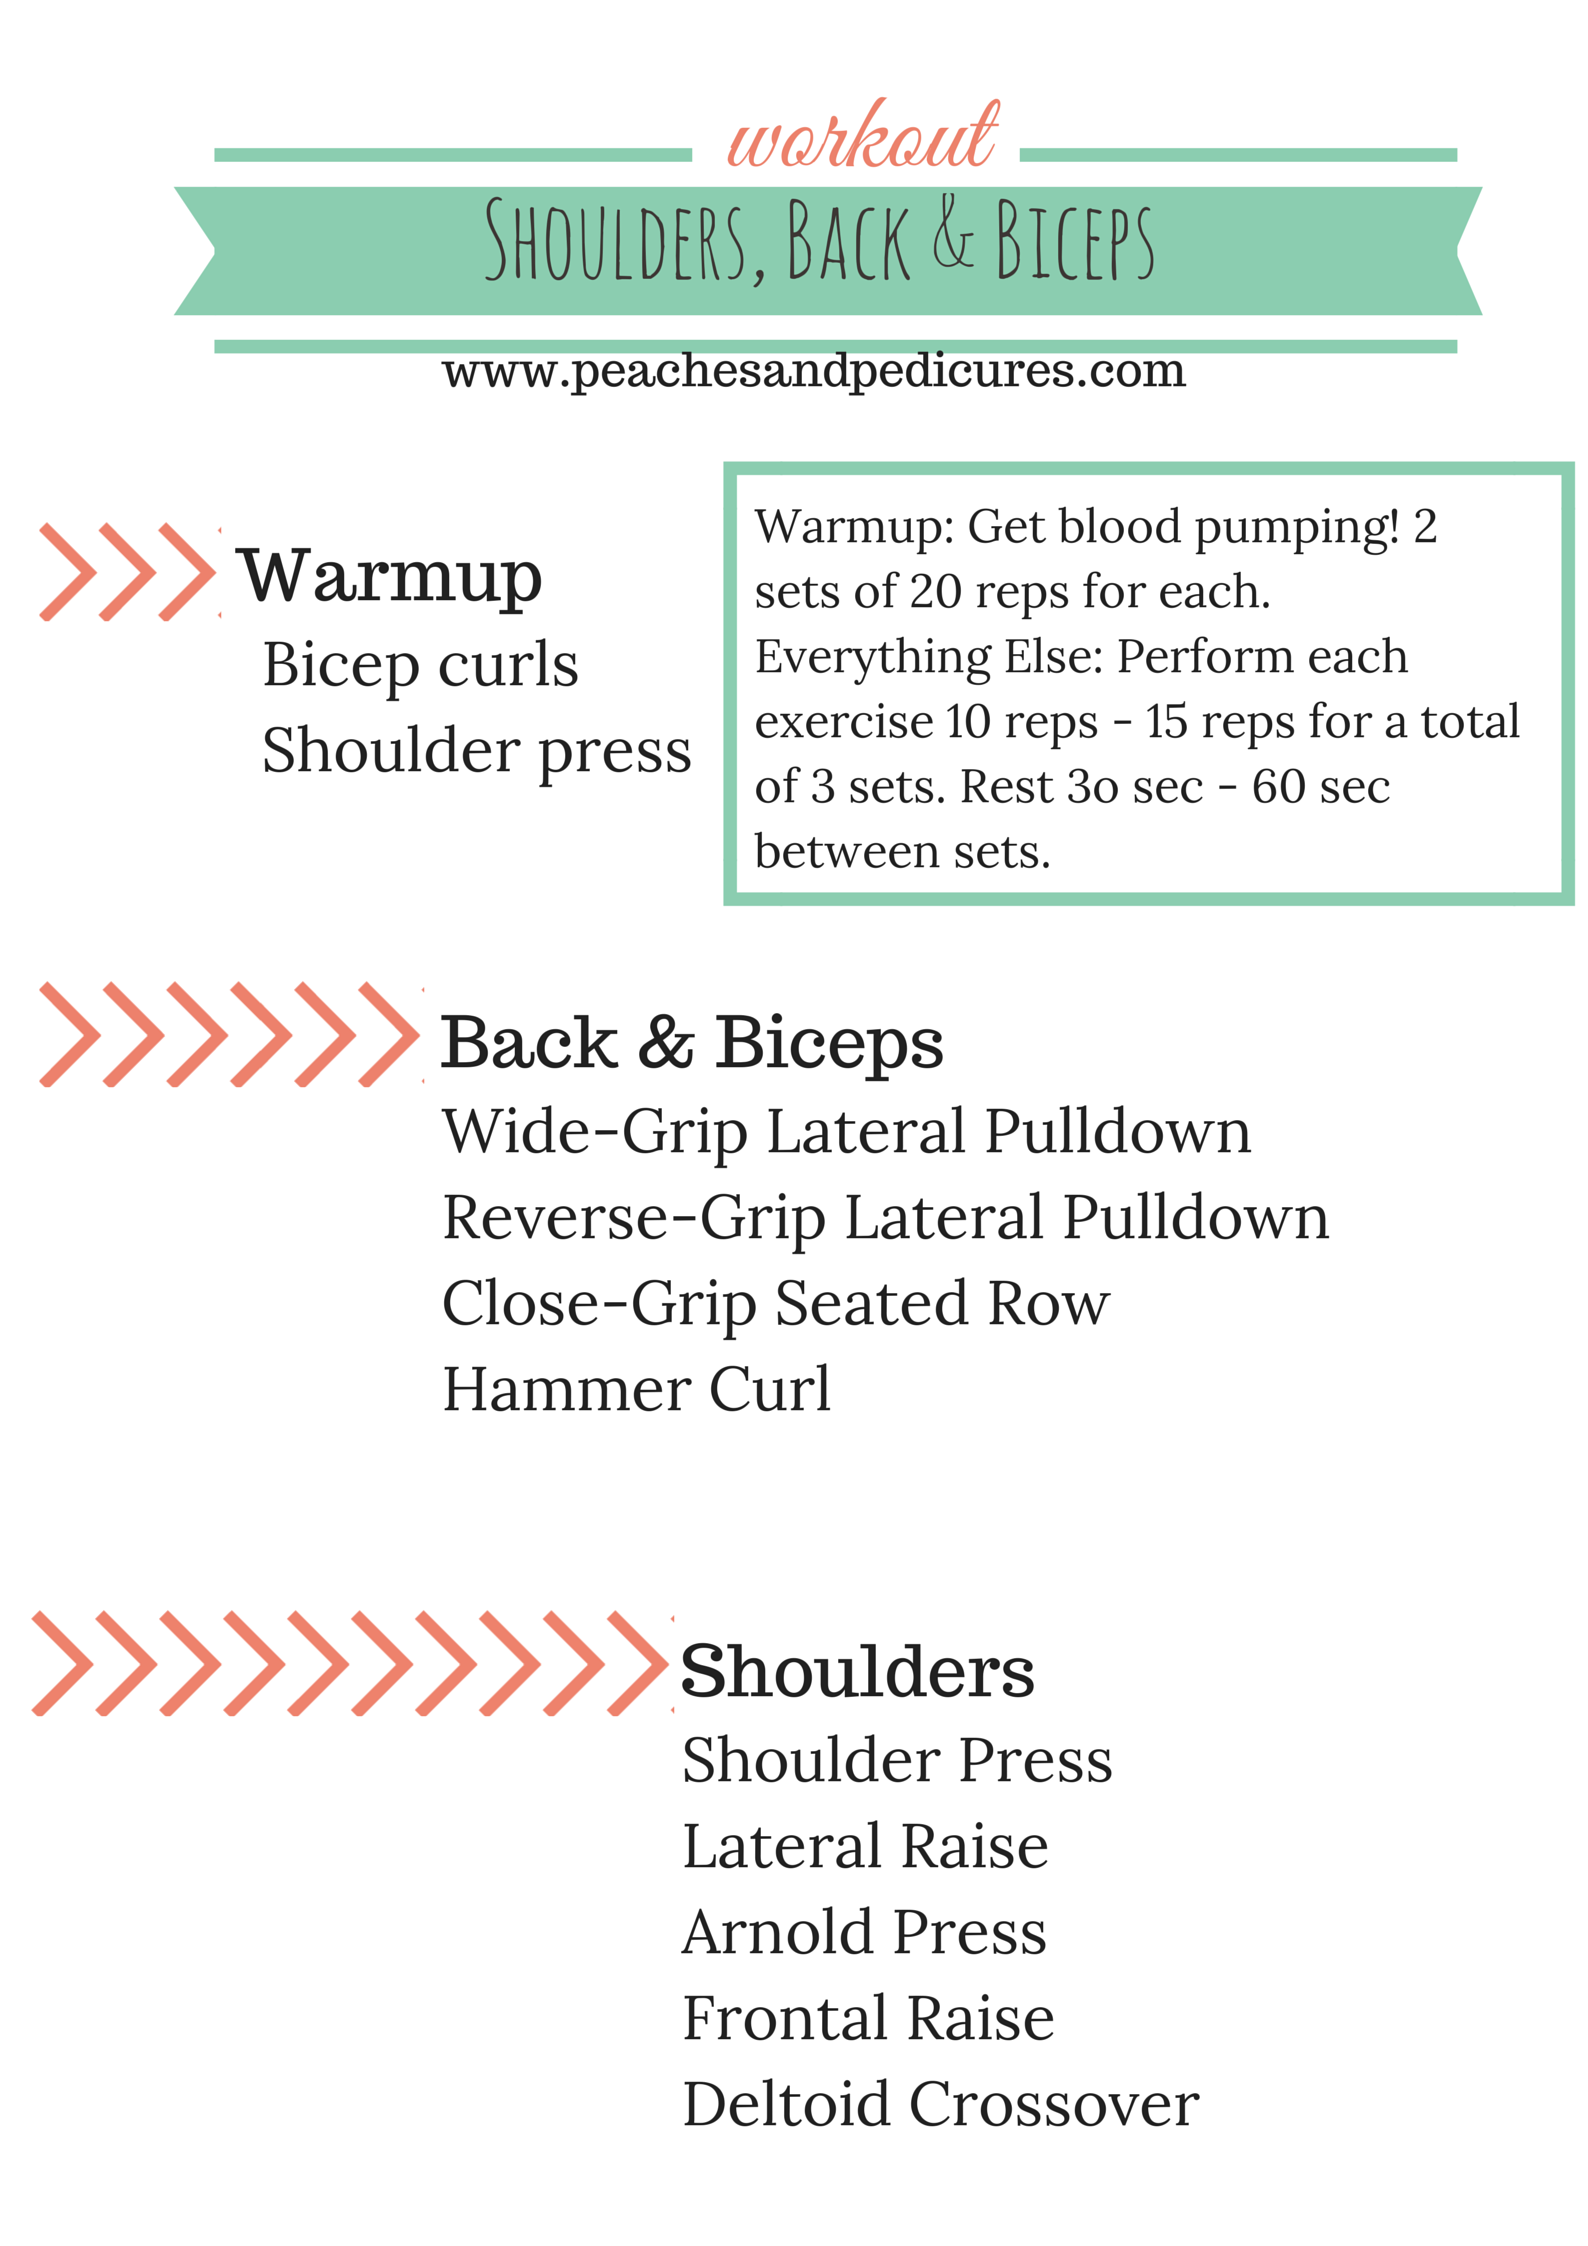 https://peachesandpedicures.files.wordpress.com/2014/09/shoulders-back-biceps.png